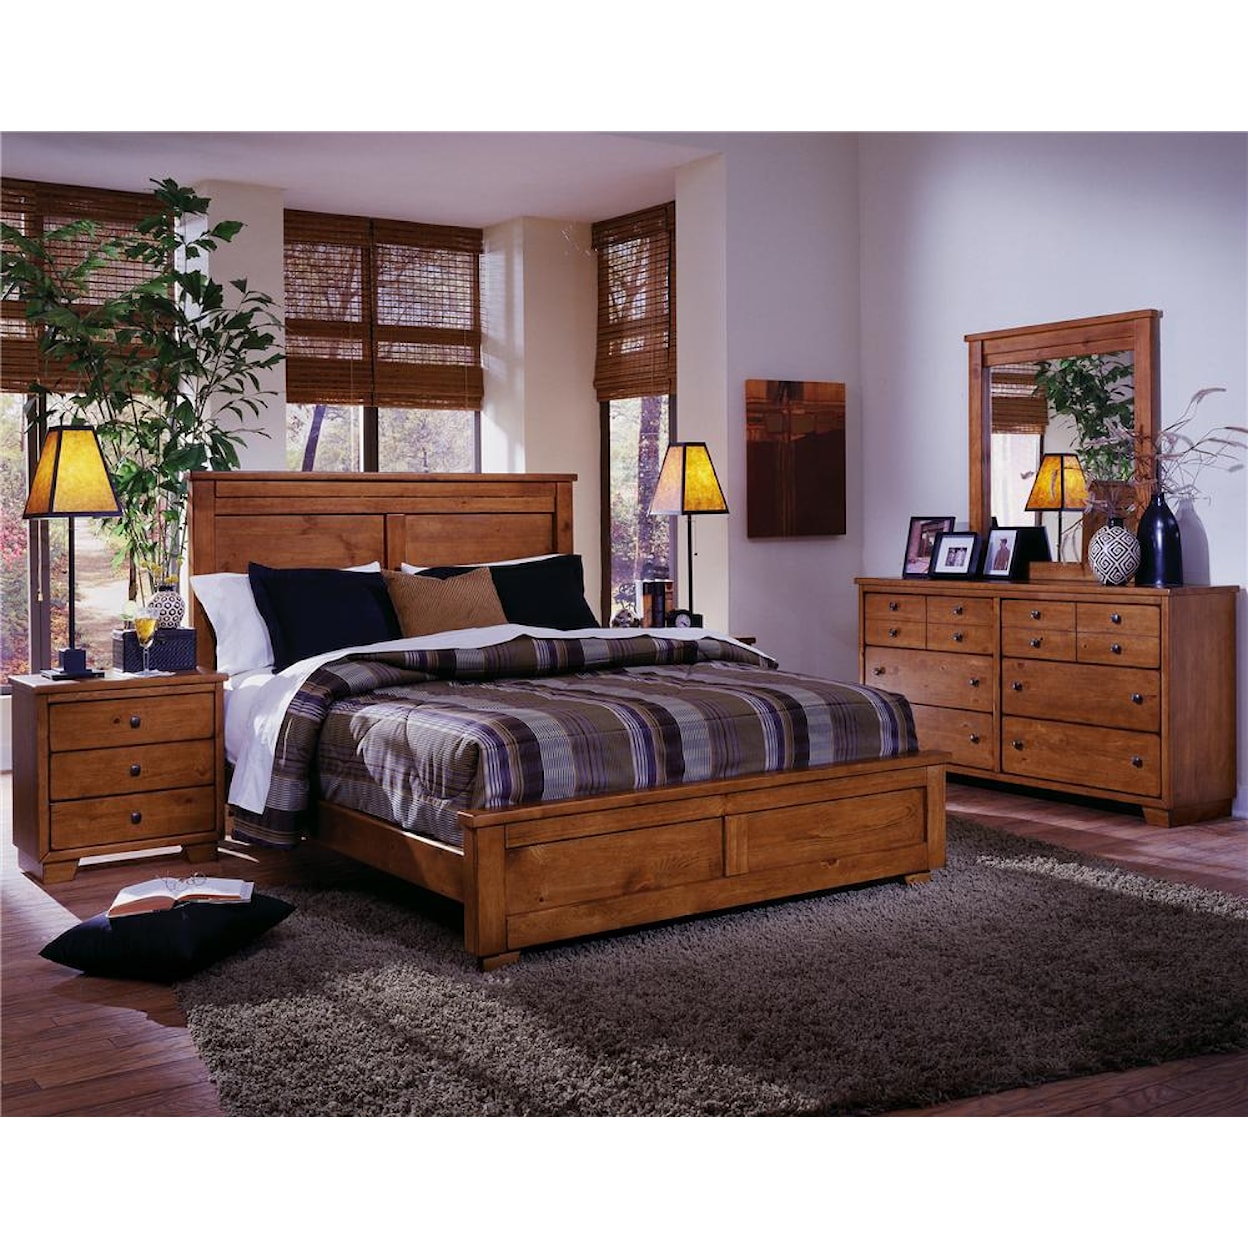 Progressive Furniture Diego King Bedroom Group